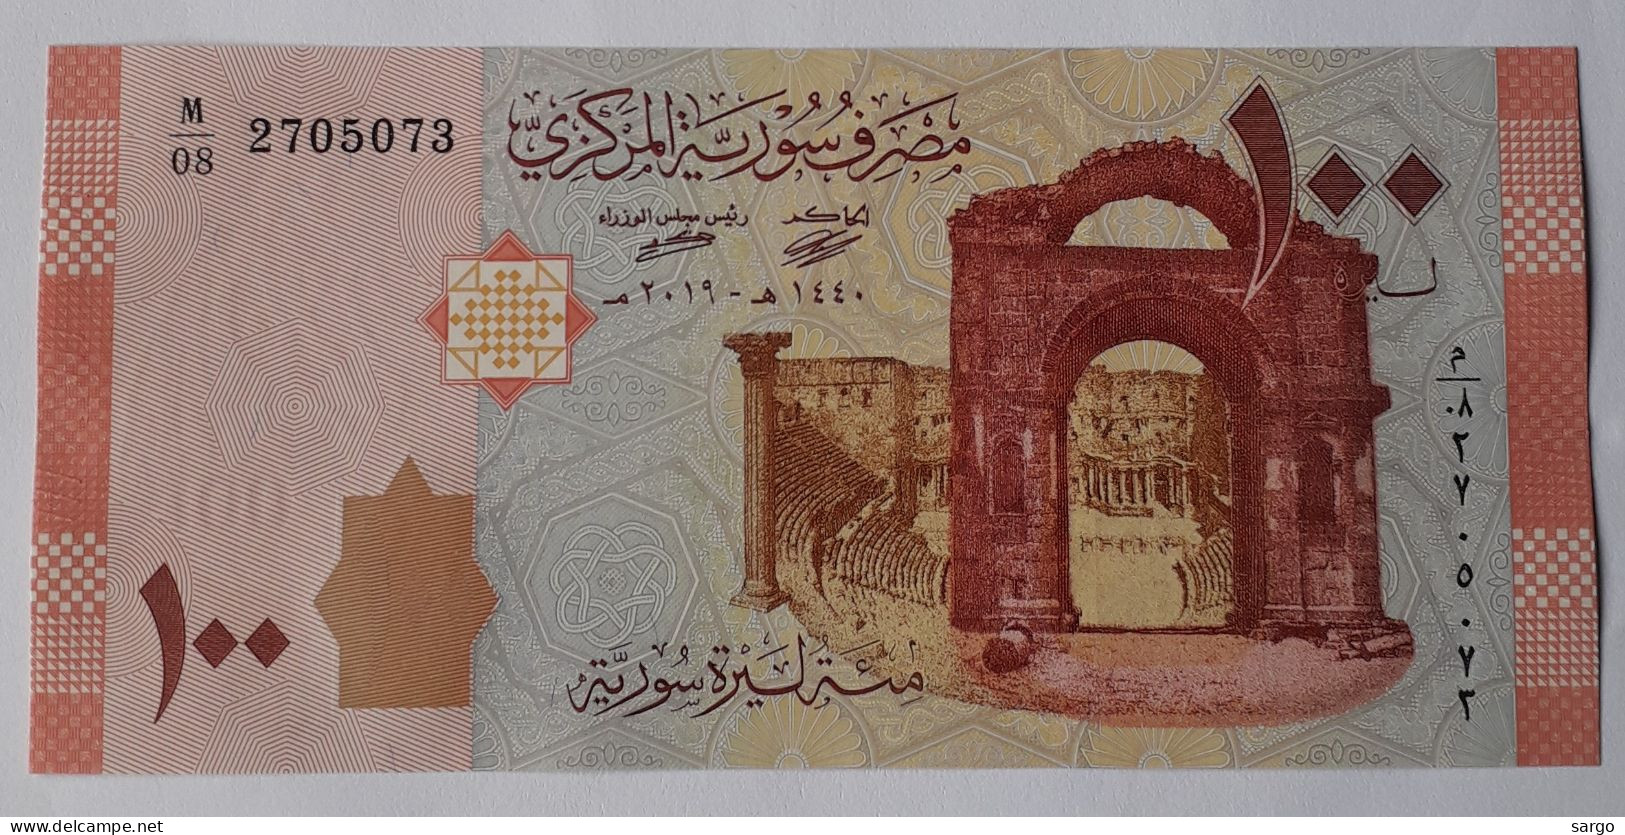 SYRIA  - 100 POUND - P 113b  (2019) - UNC -  BANKNOTES - PAPER MONEY - Syrien